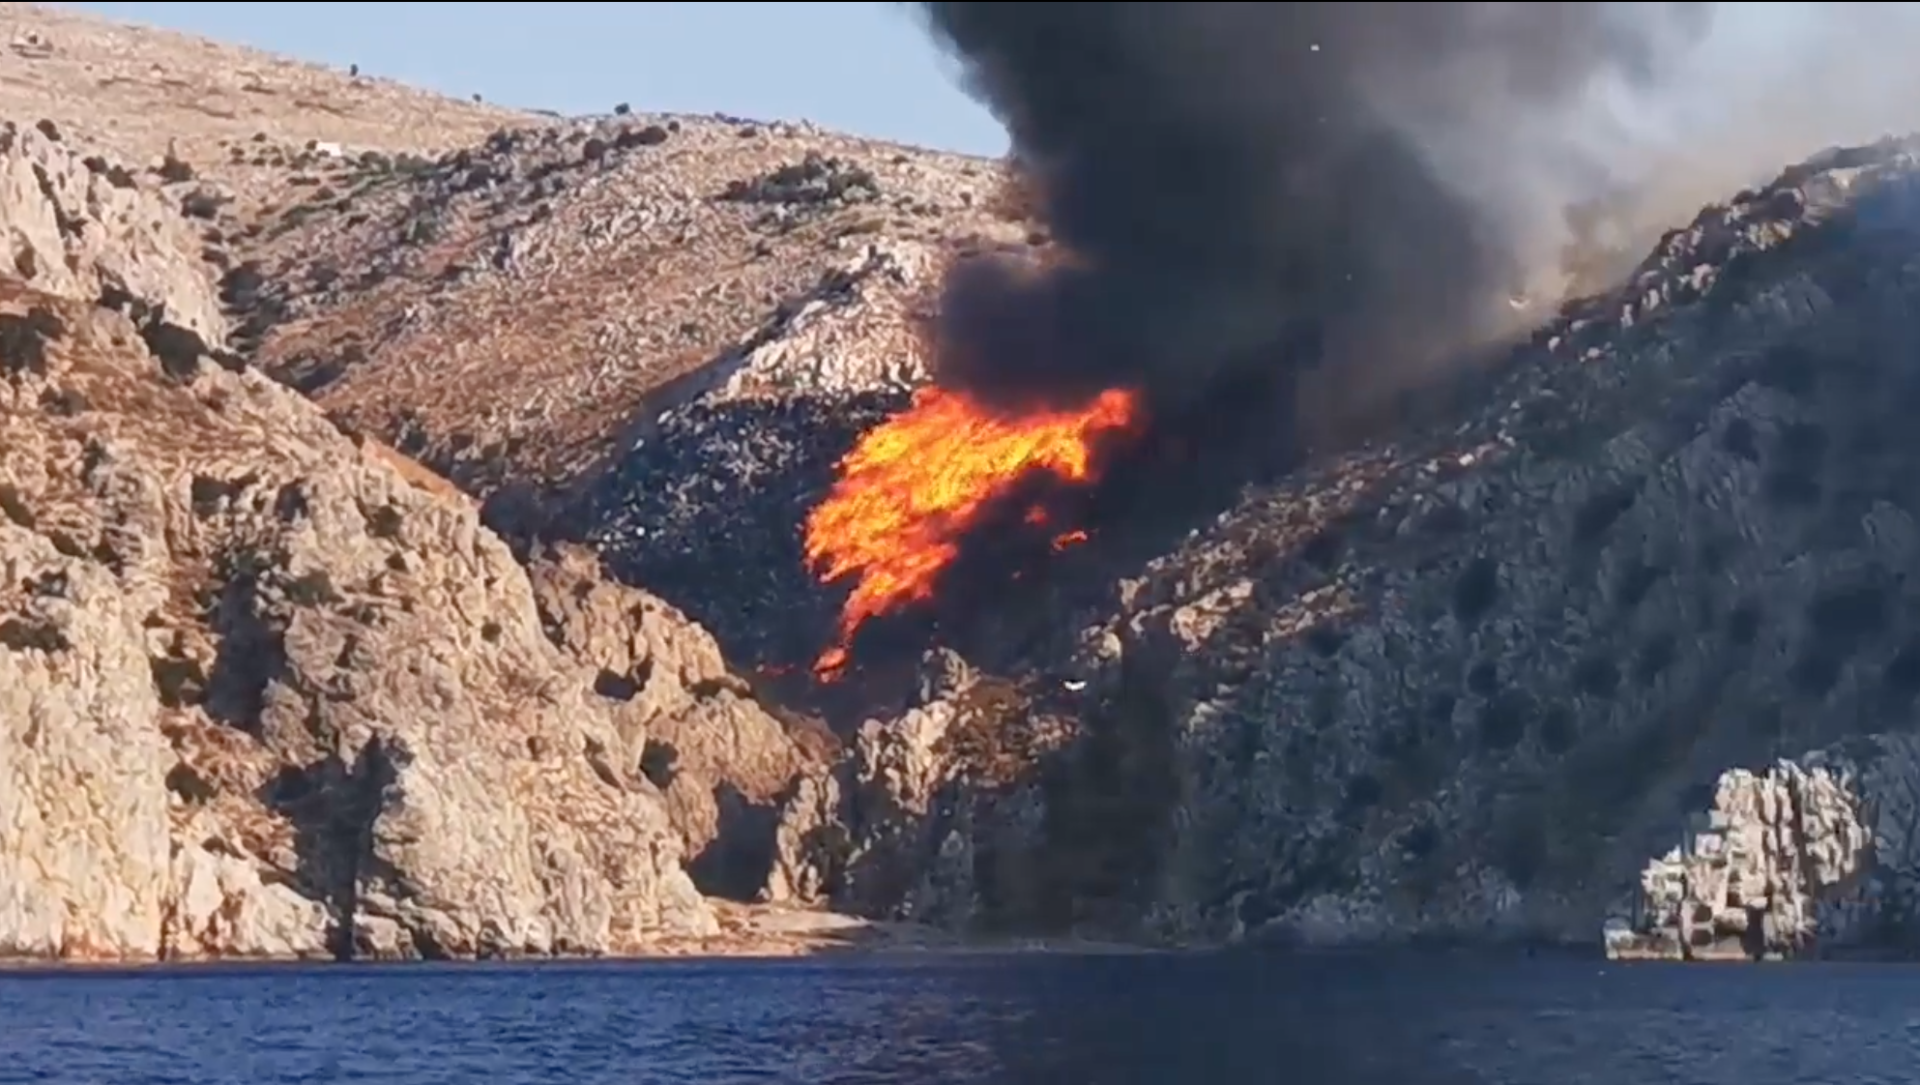 Fire on Hydra Island at the Mandraki landfill site Sun, 20 June, 2021